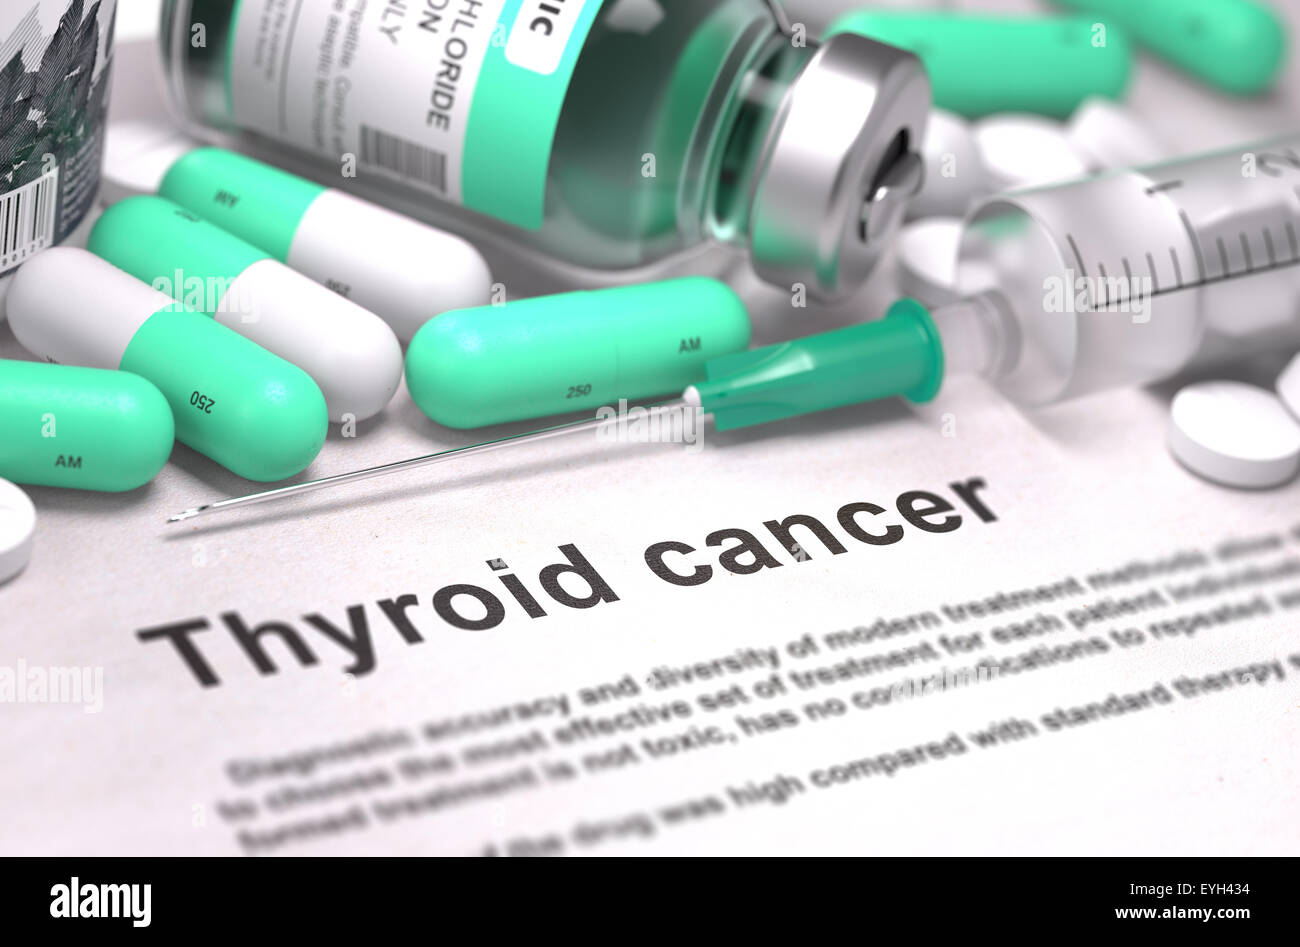 Diagnosis - Thyroid Cancer. Medical Concept. Stock Photo